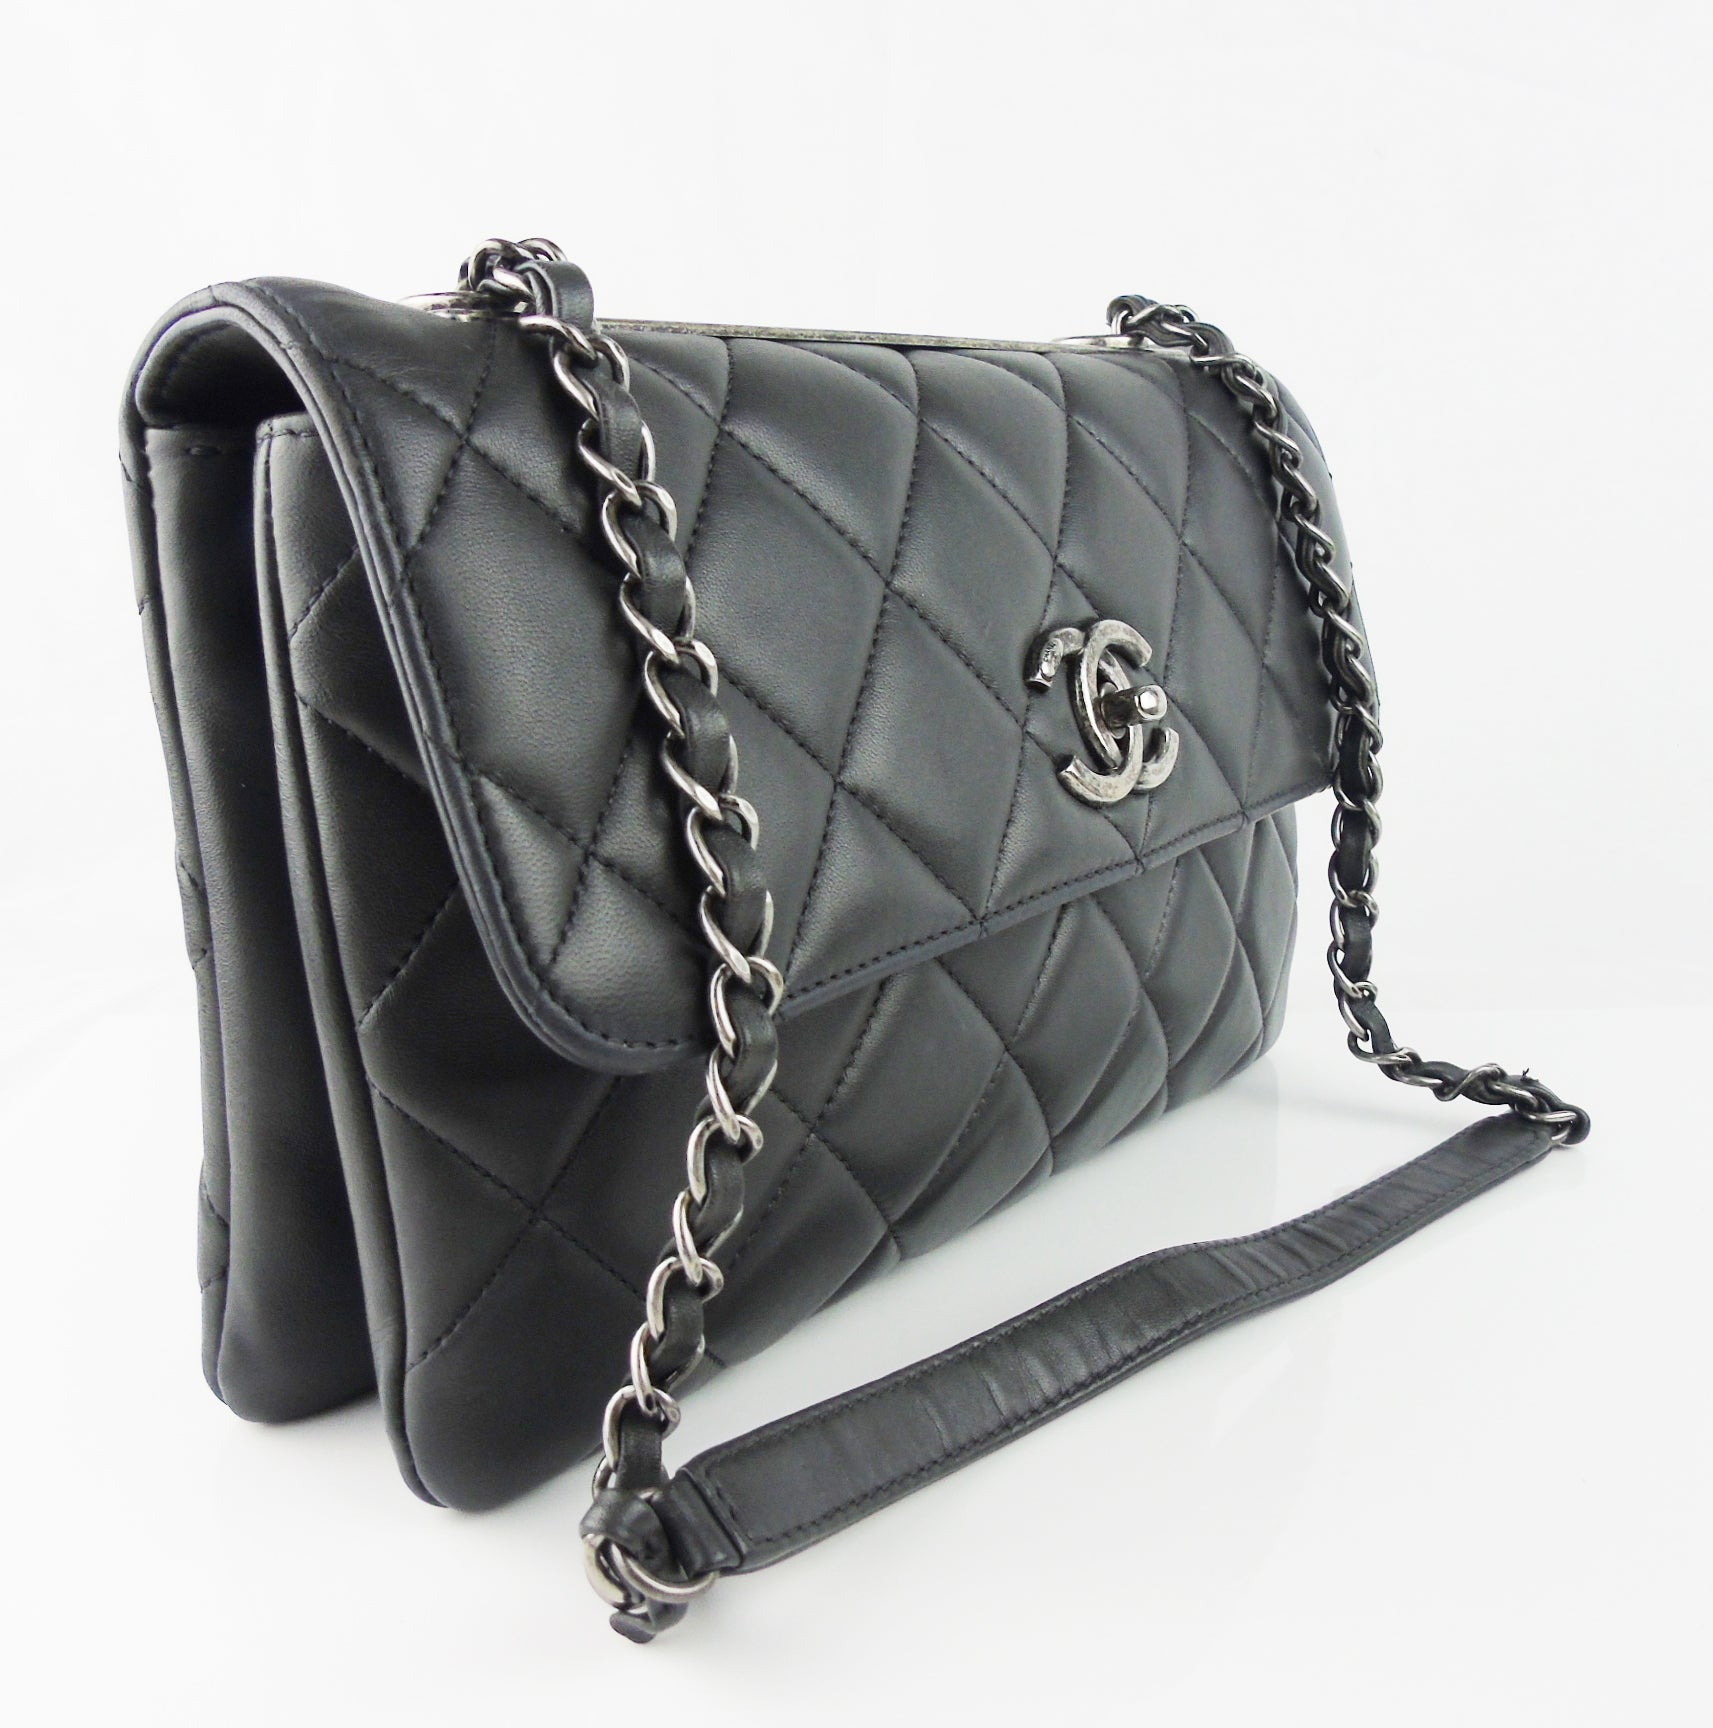 Chanel Medium Trendy CC Flap